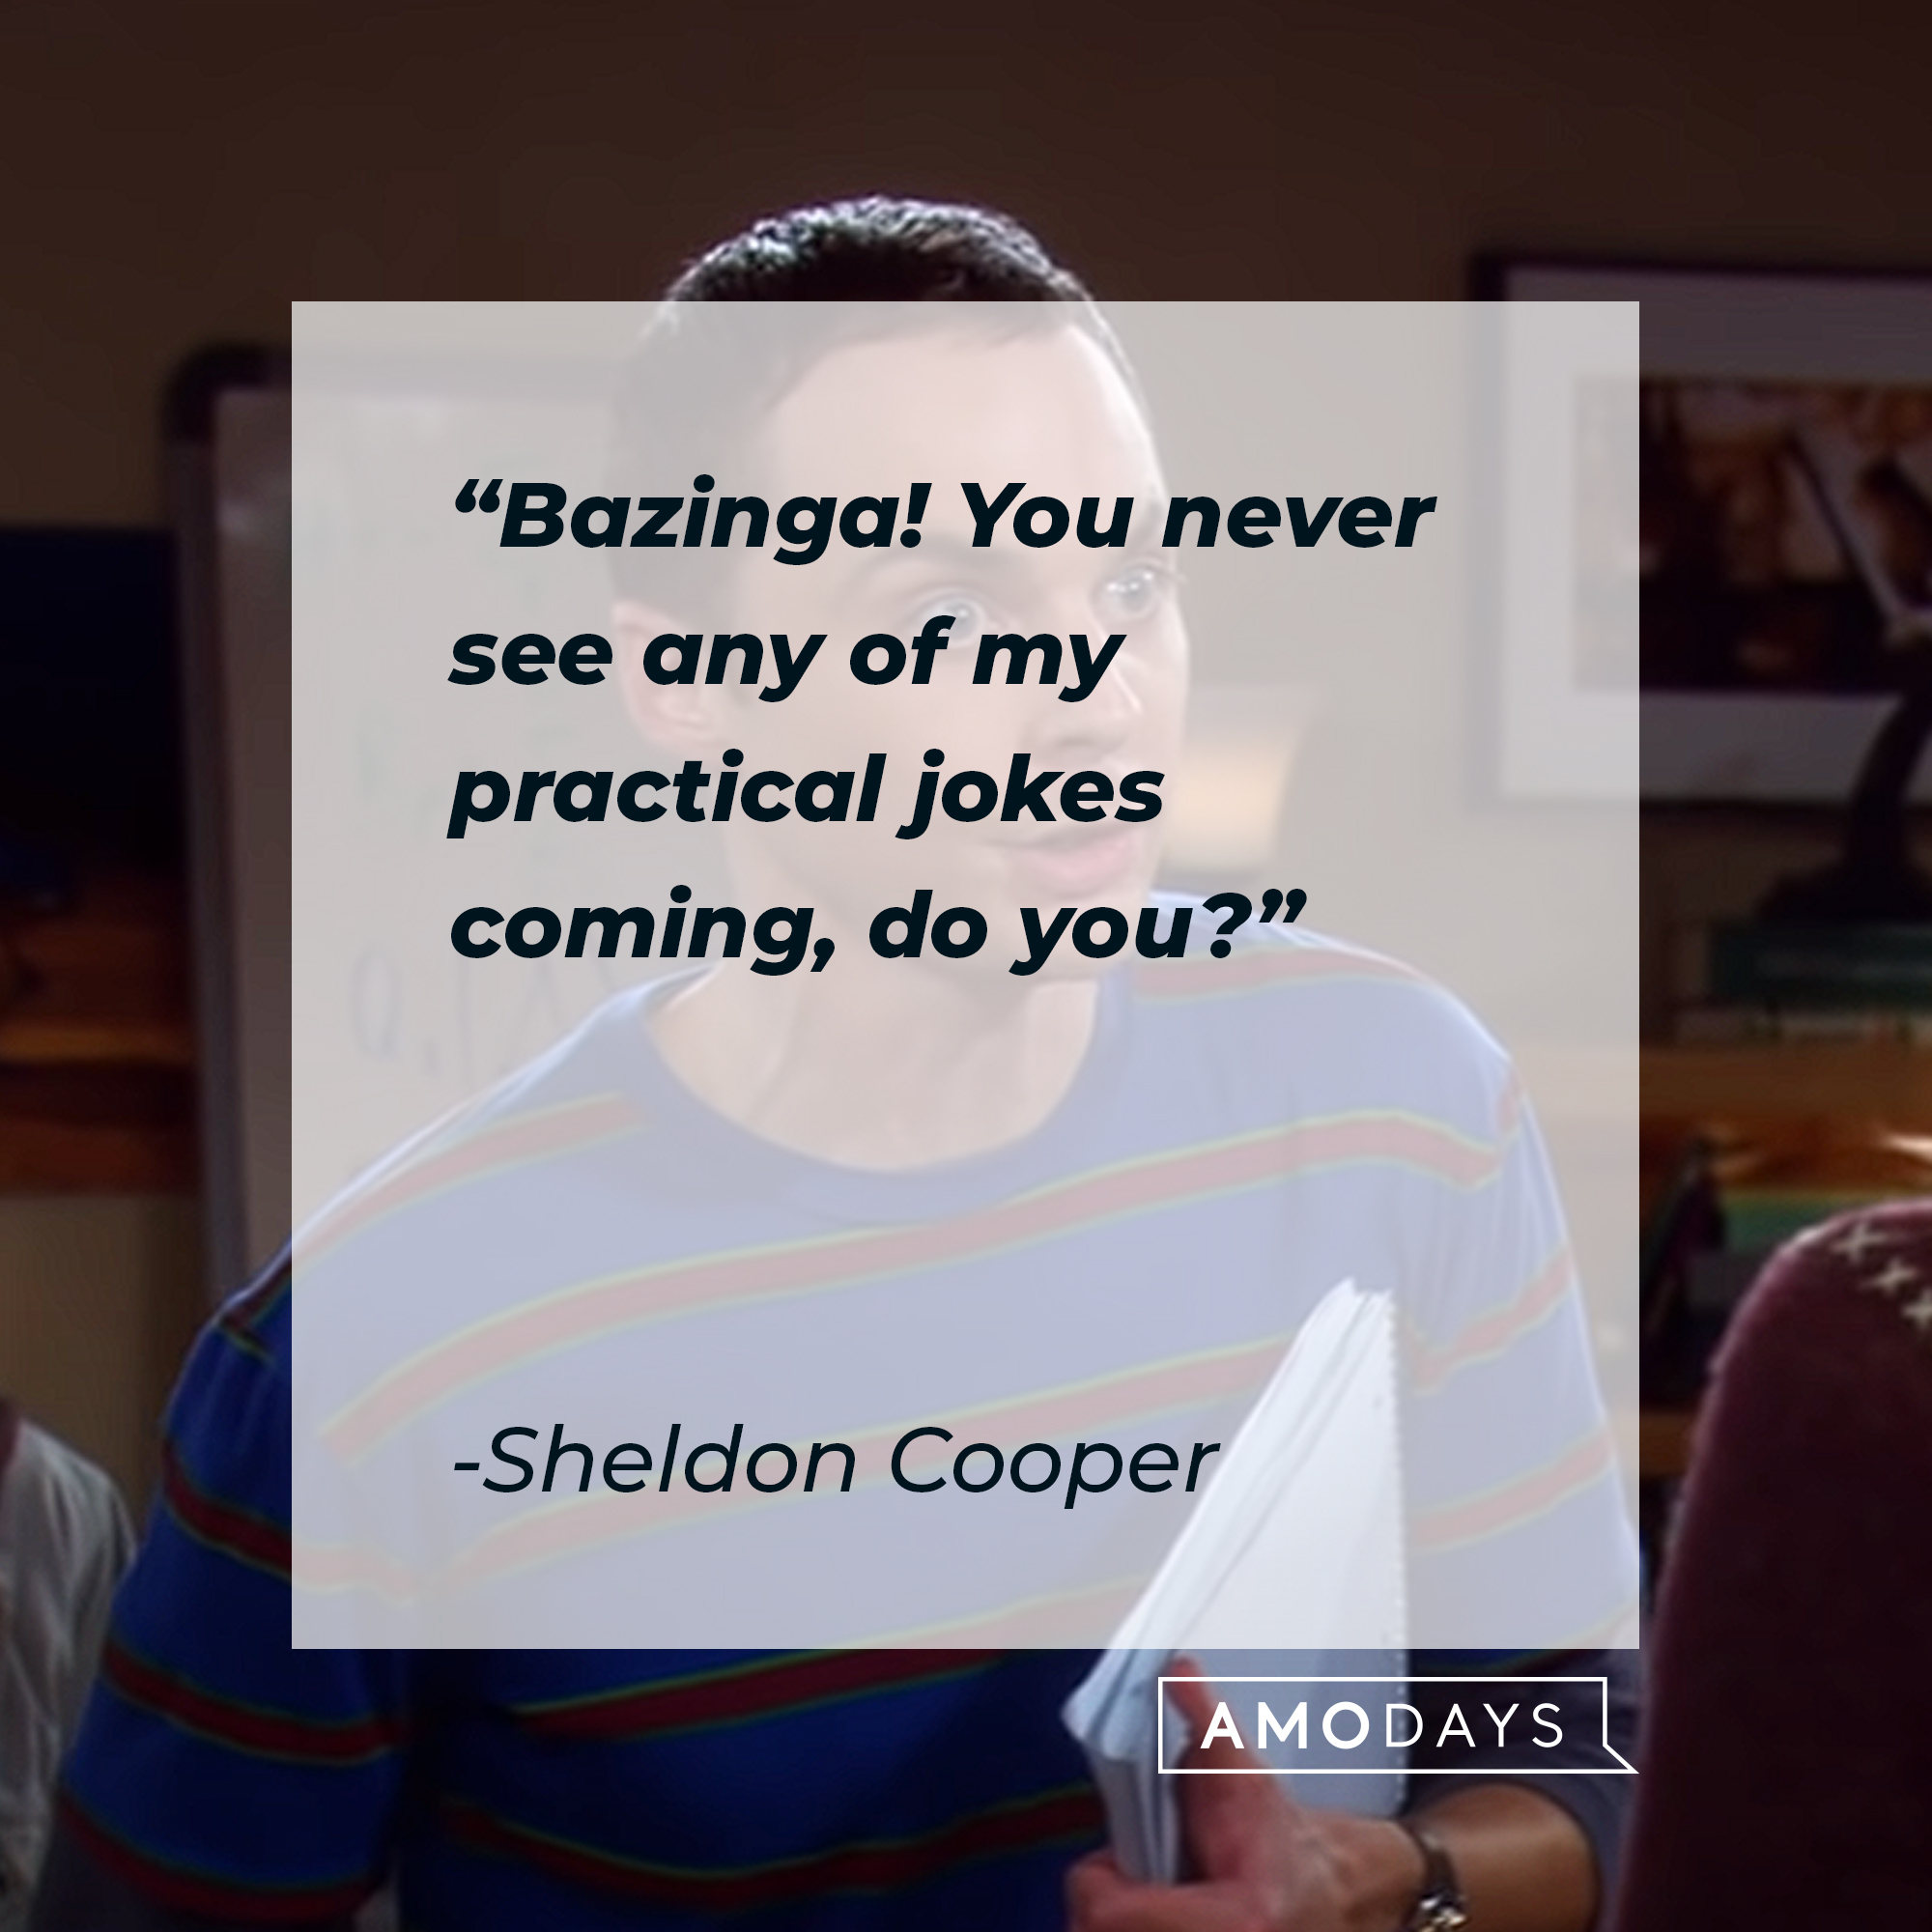 Sheldon Cooper's quote: "Bazinga! You never see any of my practical jokes coming, do you?" | Source: youtube.com/warnerbrostv